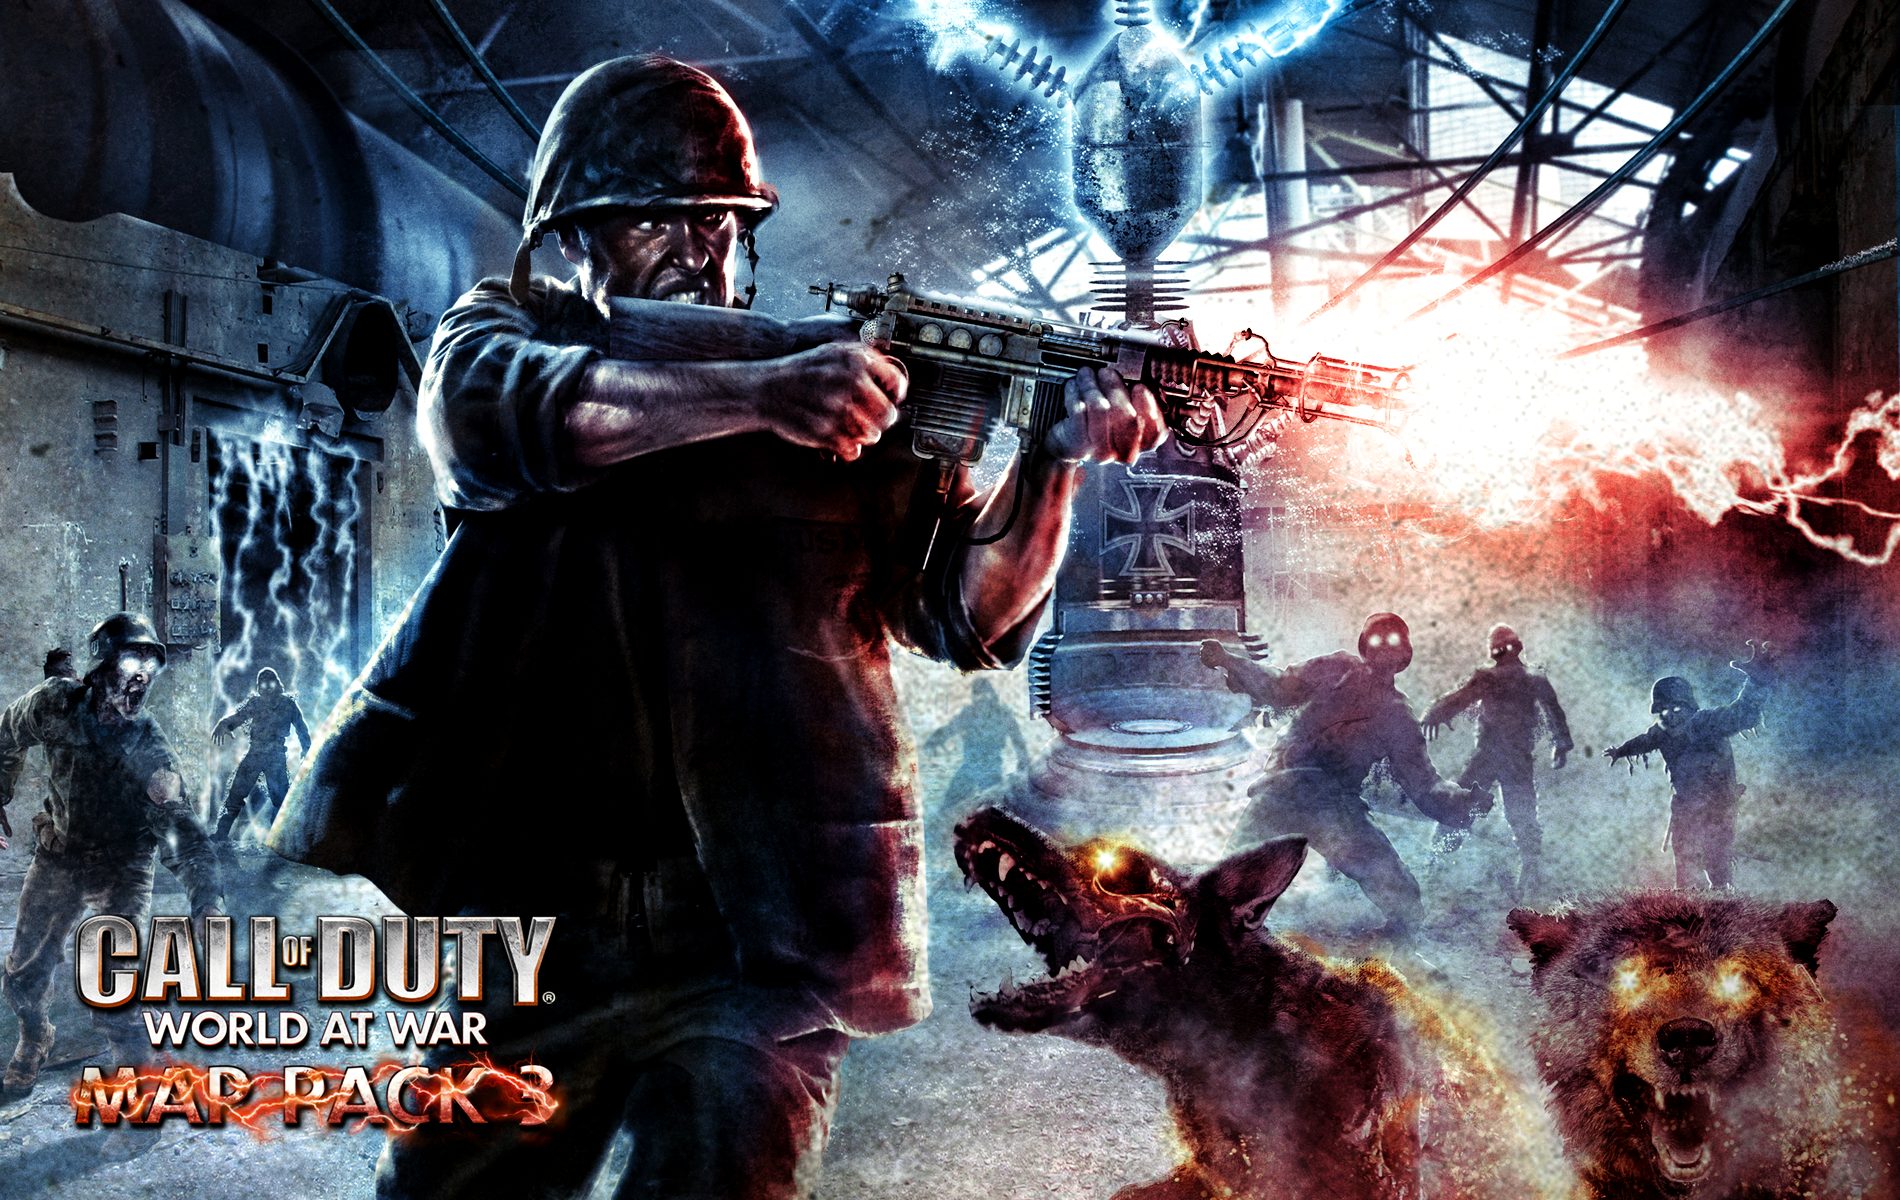 Video Game Call of Duty: World at War Wallpaper